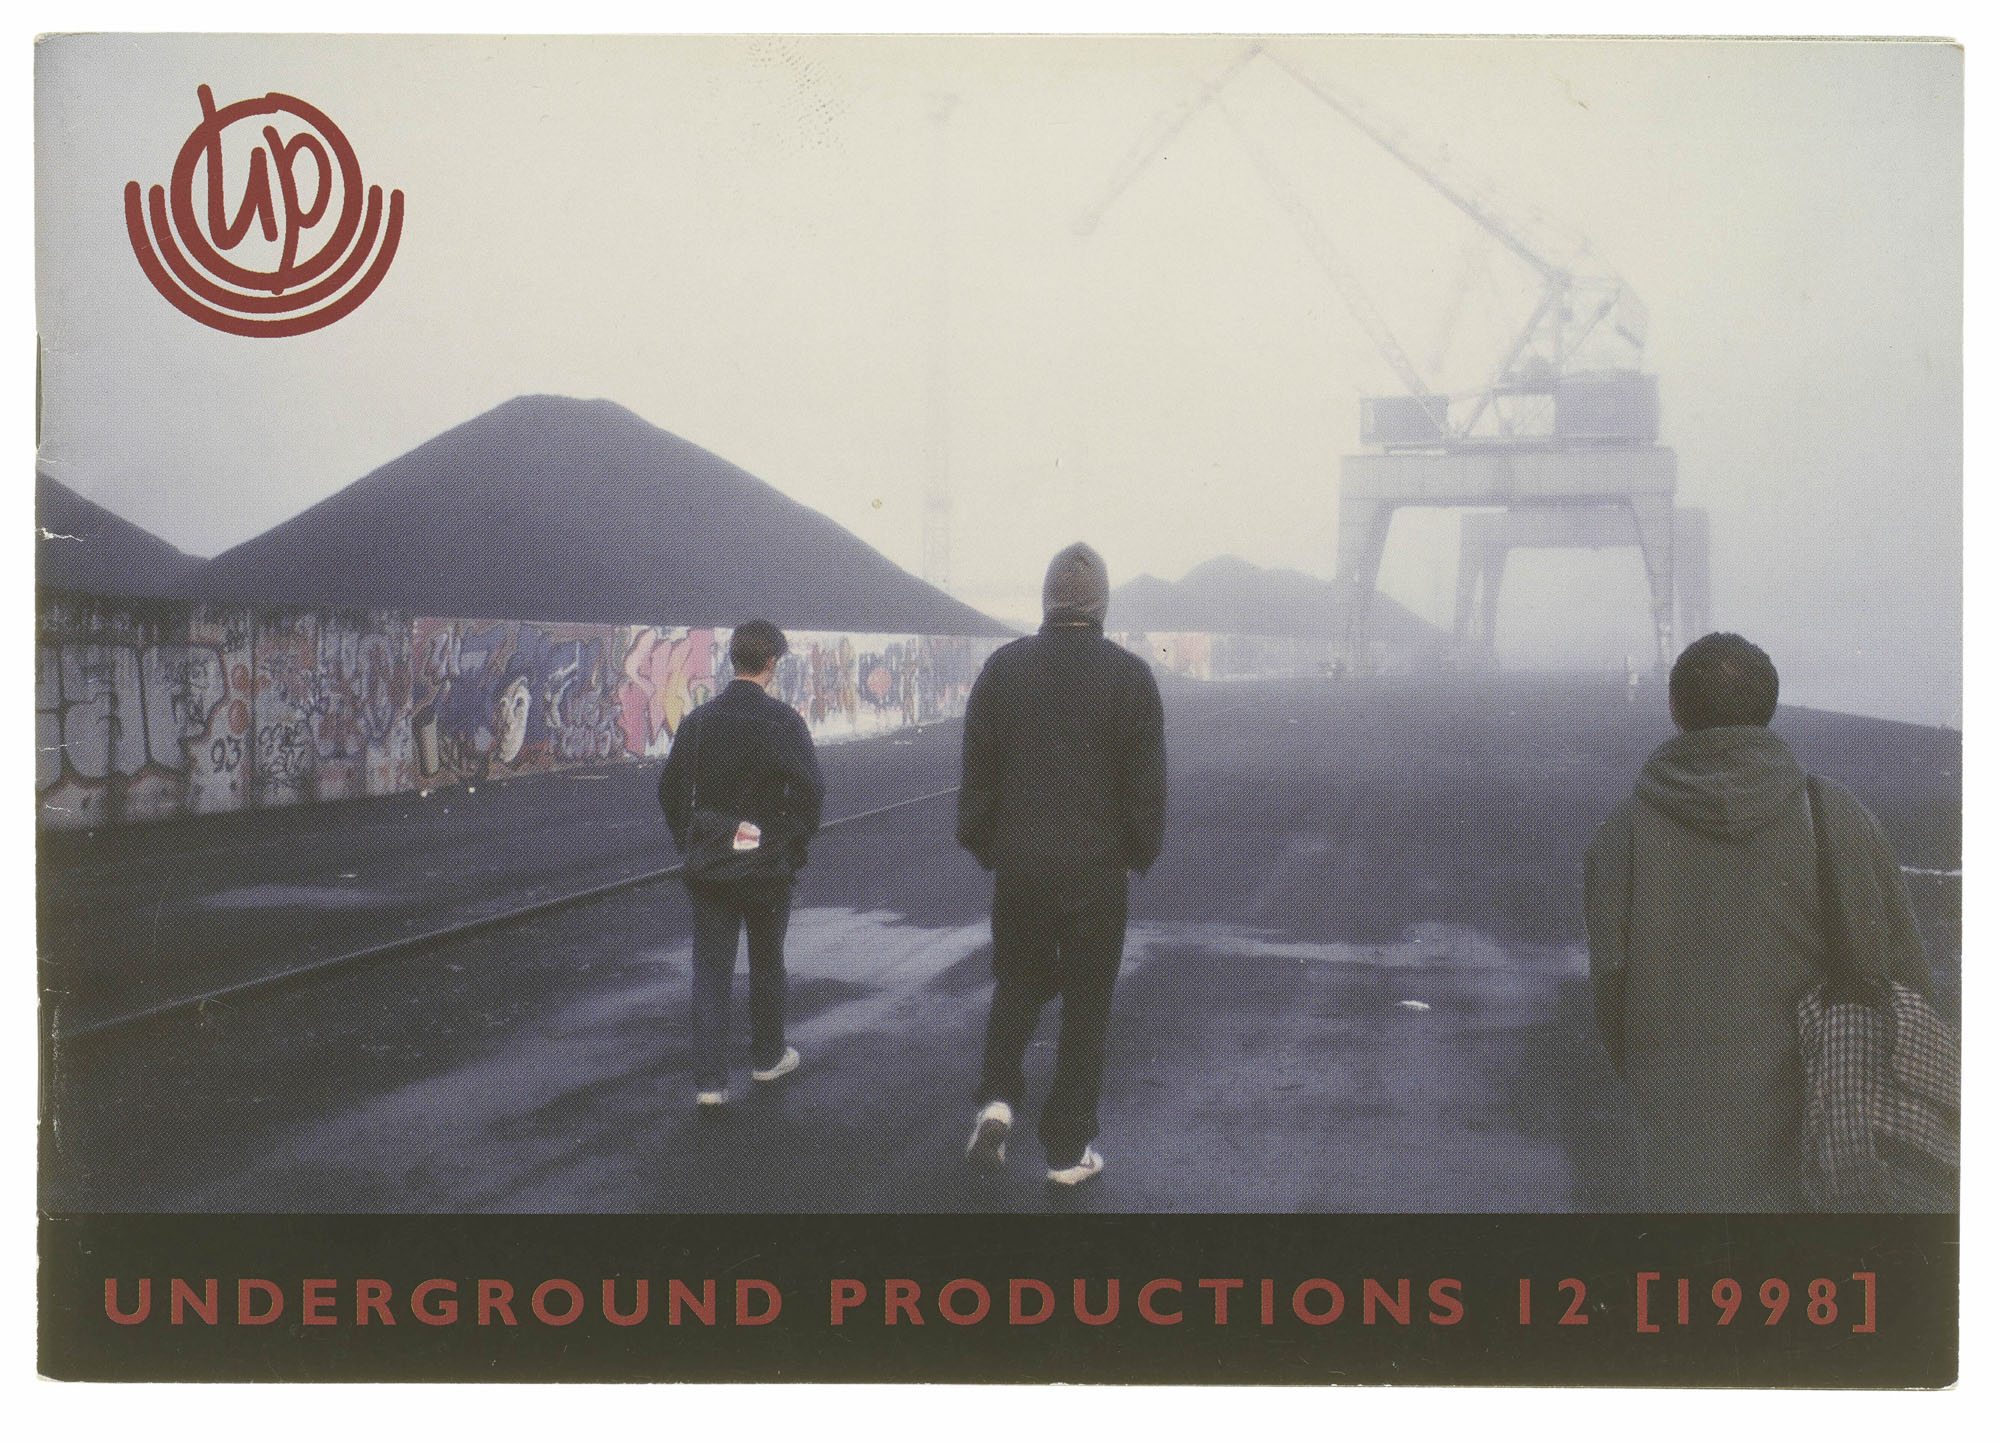 Track 172 / Jacob Kimvall, Malcolm Jacobson, Tobias Barenthin Lindblad, Underground Productions, issue 12, 1998, offset, Stockholm